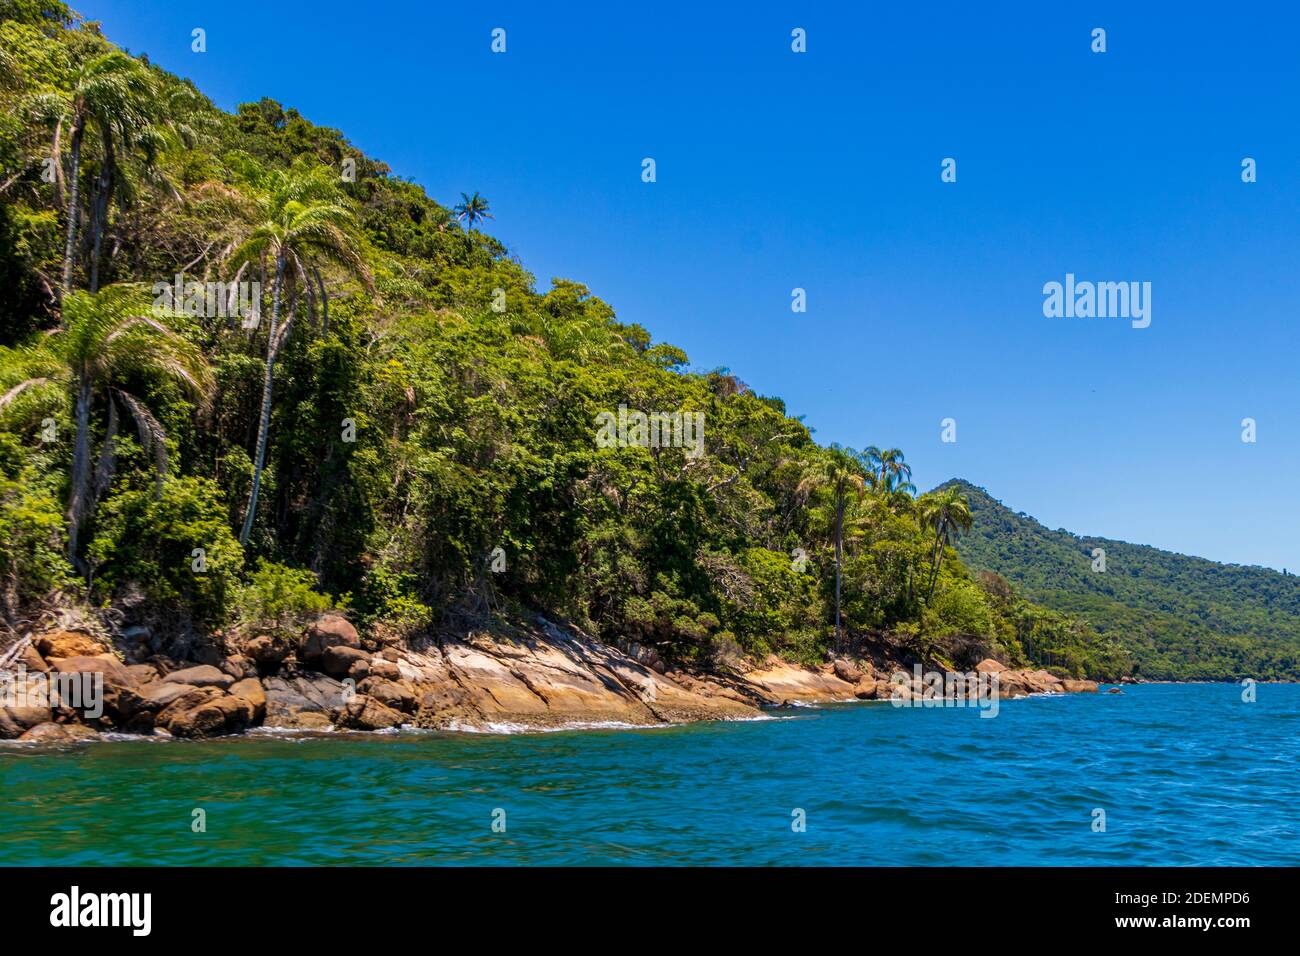 The big tropical island Ilha Grande in Angra dos Reis, Rio de Janeiro, Brazil. Stock Photo